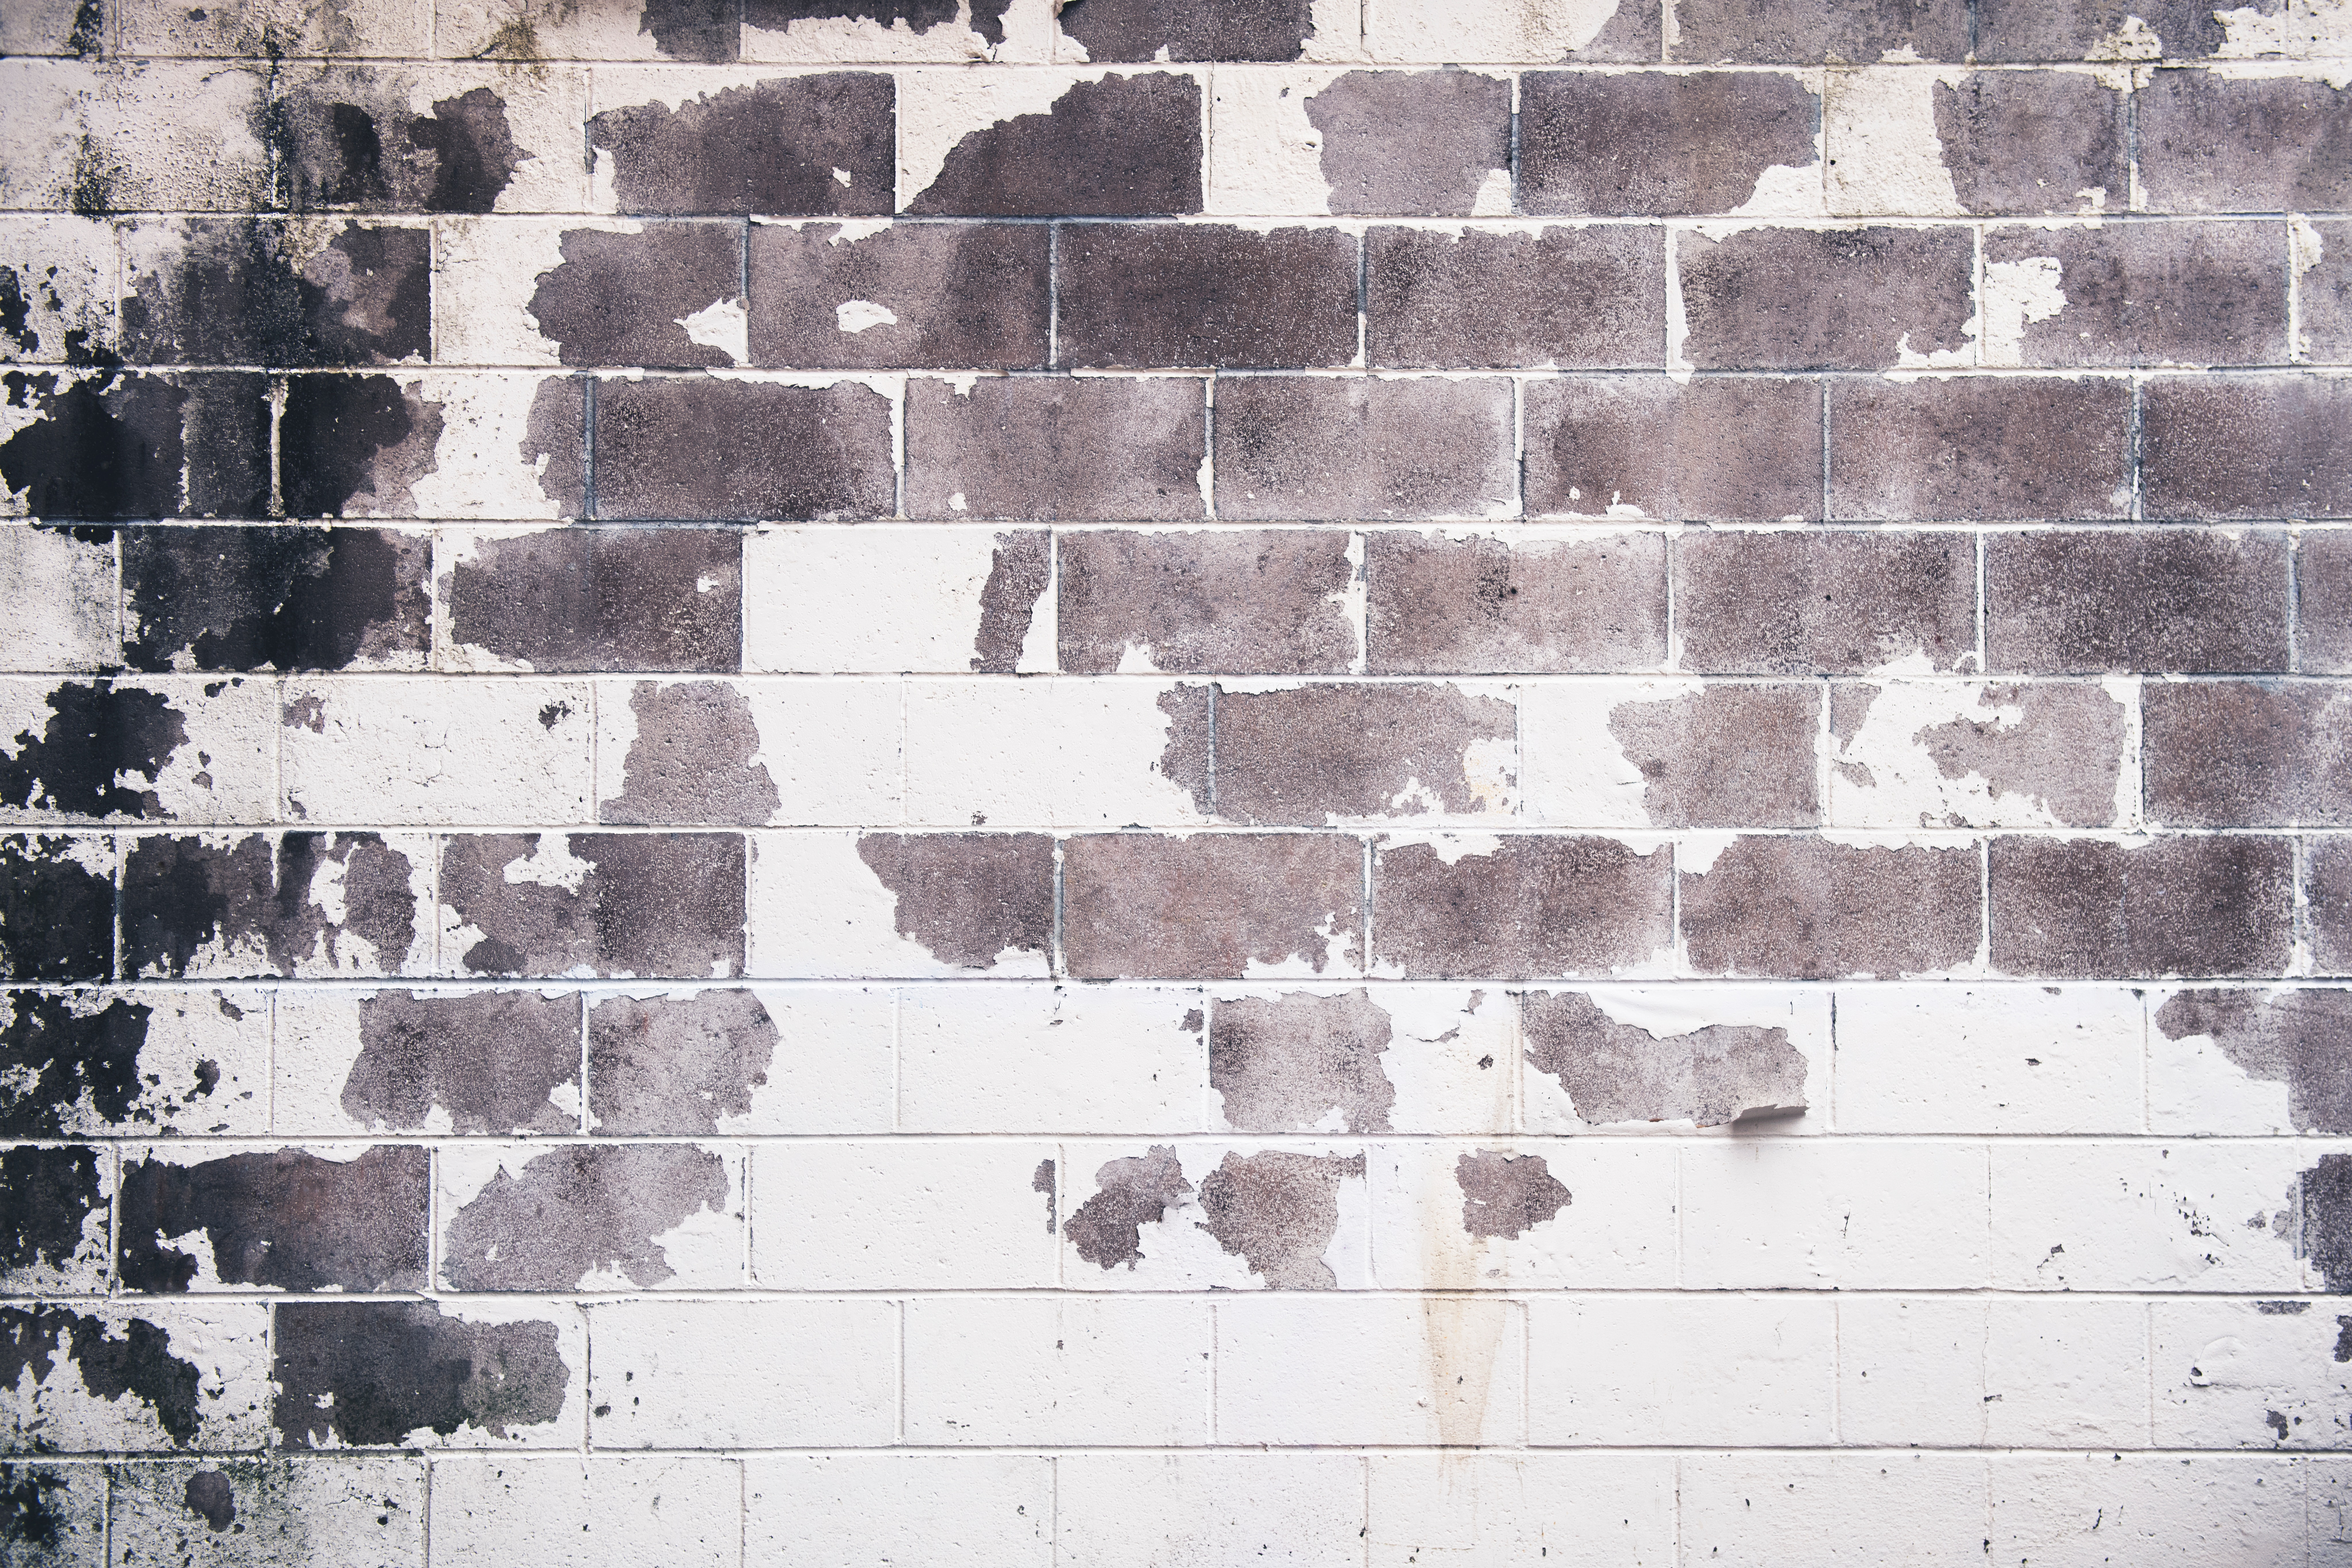 White and Gray Concrete Brick Wall, Architecture, Grunge, Urban, Tile, HQ Photo